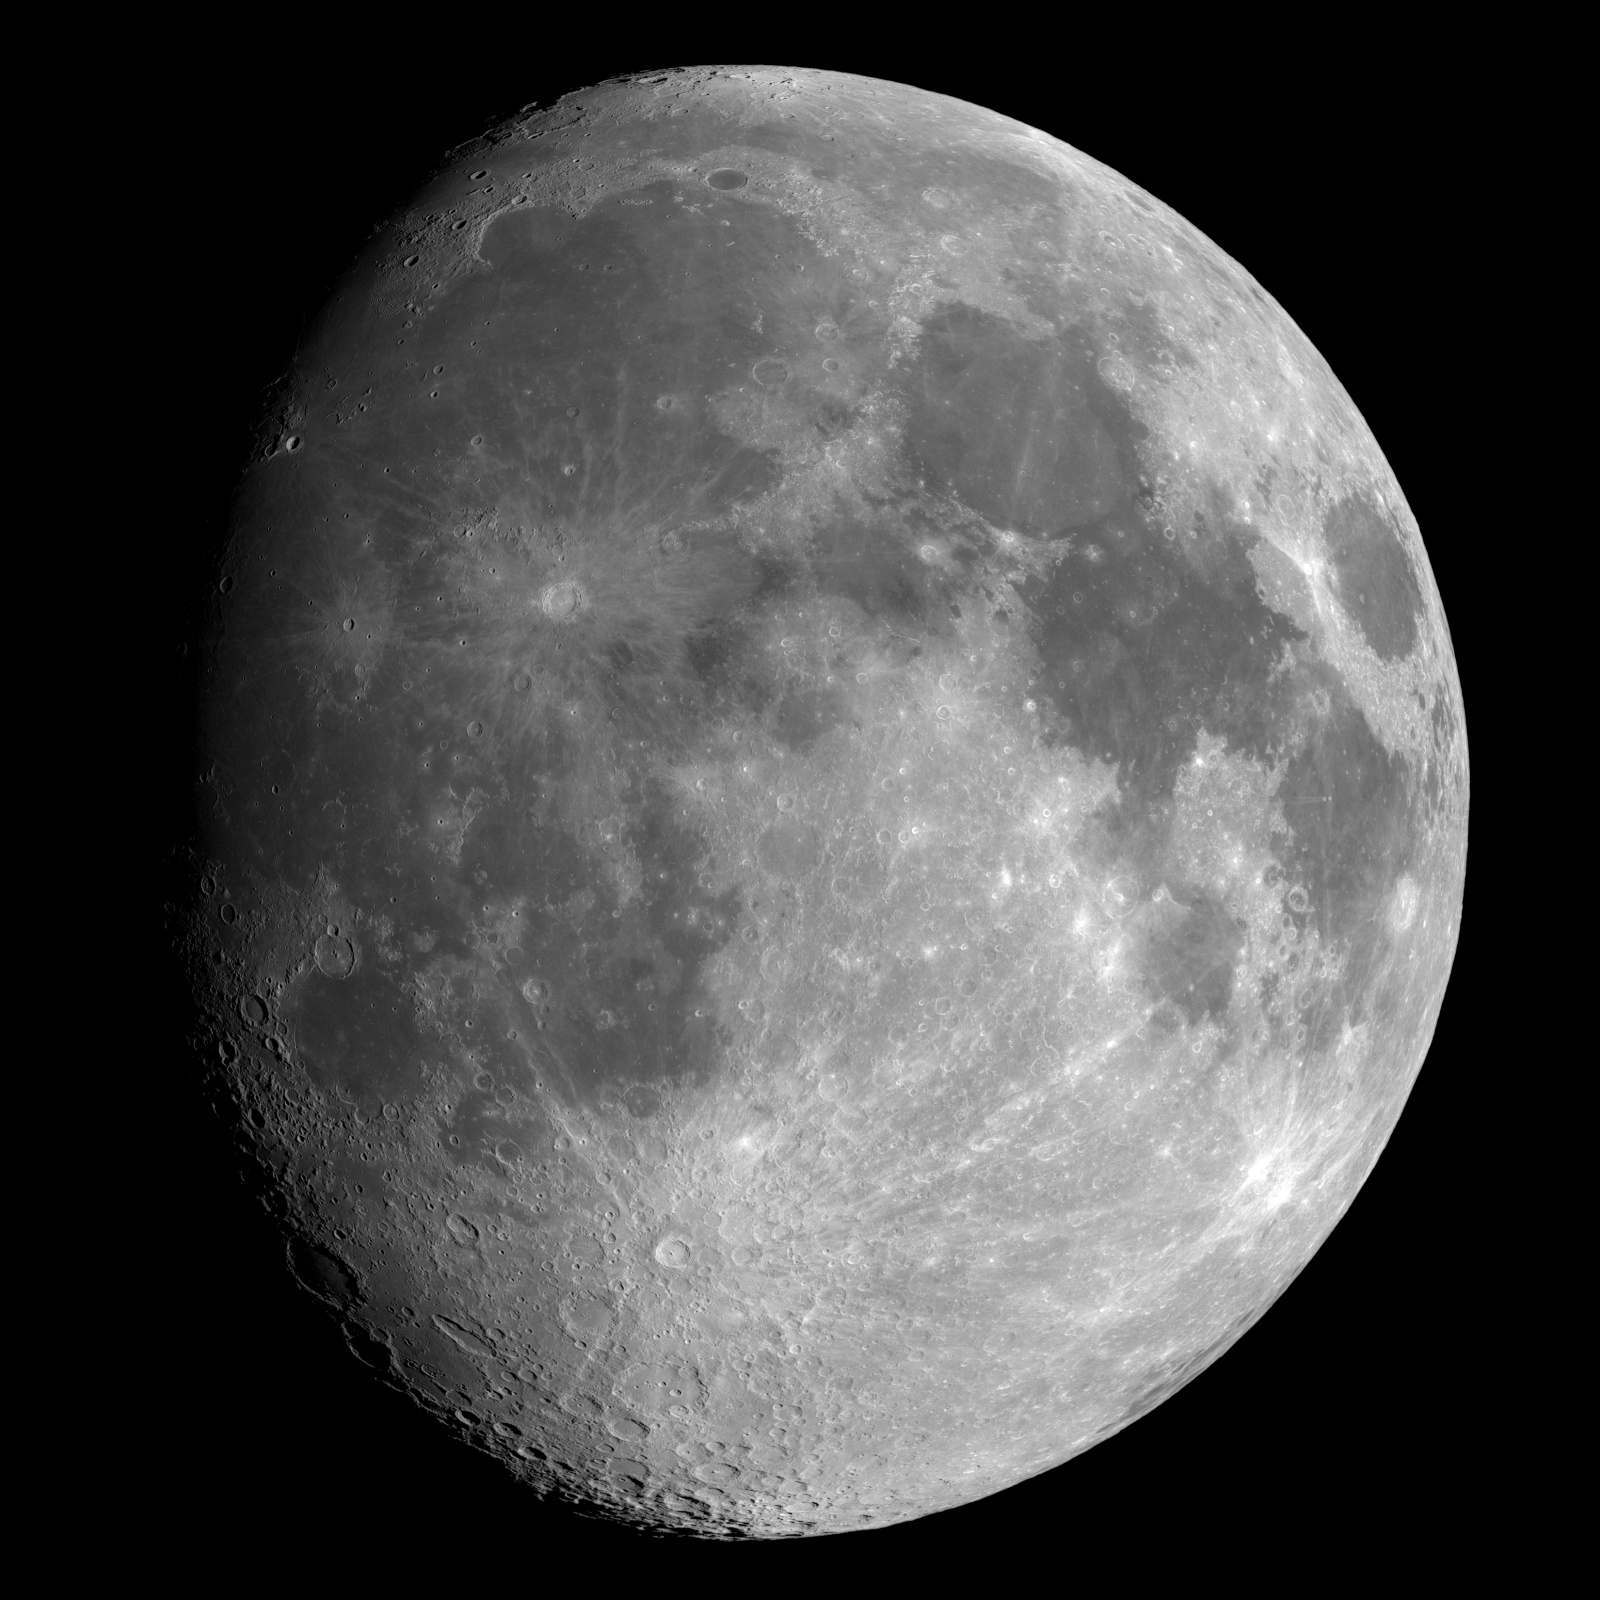 Księżyc 4 dni po I kw.  25.03.2021r_18.30_TS152F900_ASI290MM_Omegon Halpha 12nm_mozaika.6x_105%....jpg